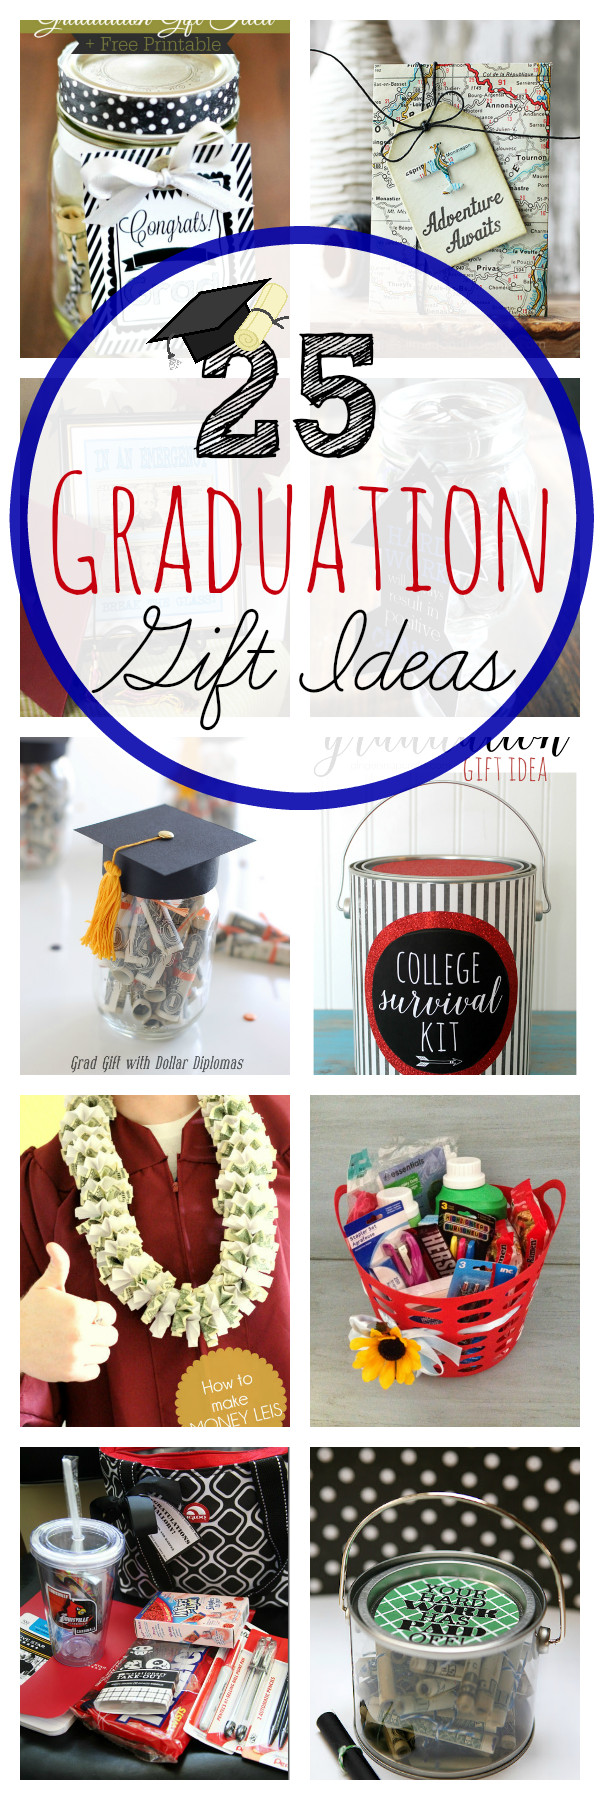 Crazy Graduation Party Ideas
 25 Graduation Gift Ideas